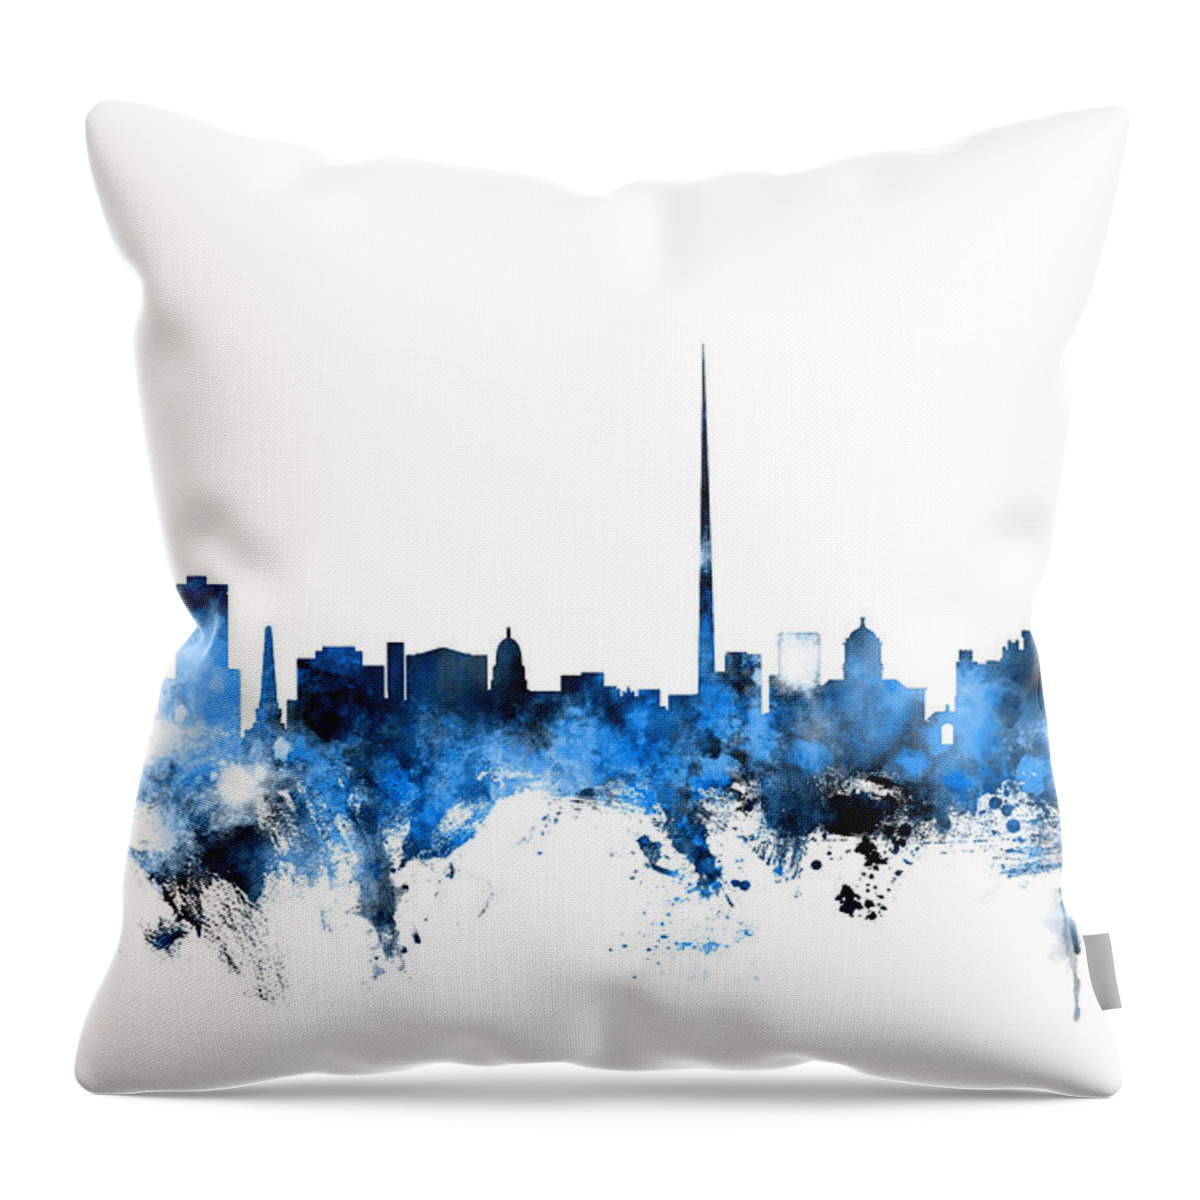 City Throw Pillow featuring the digital art Dublin Ireland Skyline by Michael Tompsett